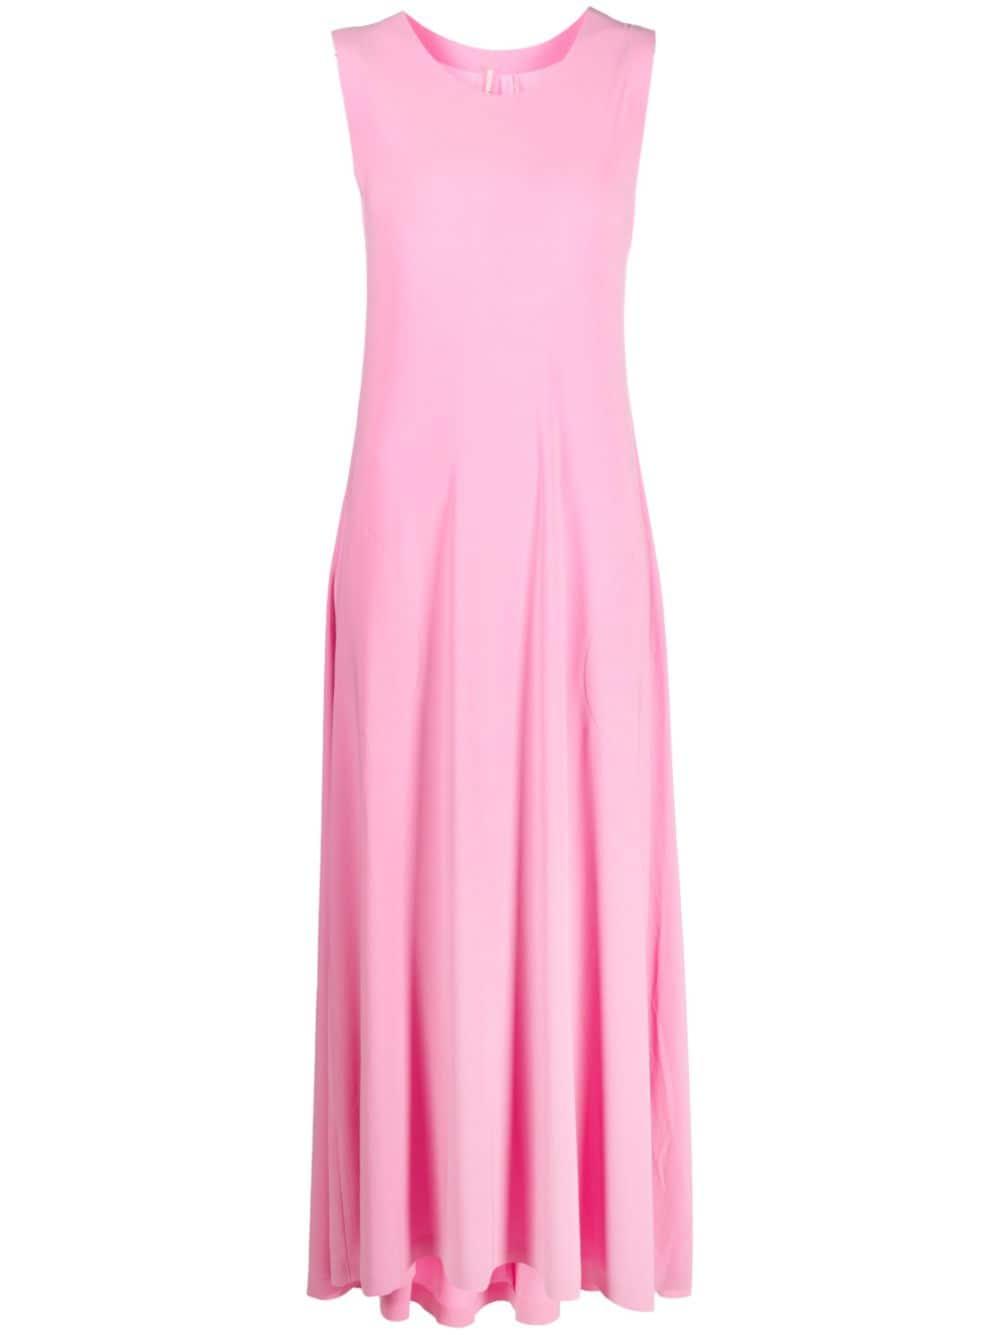 Norma Kamali Seamless Shift Dress in Pink | Lyst